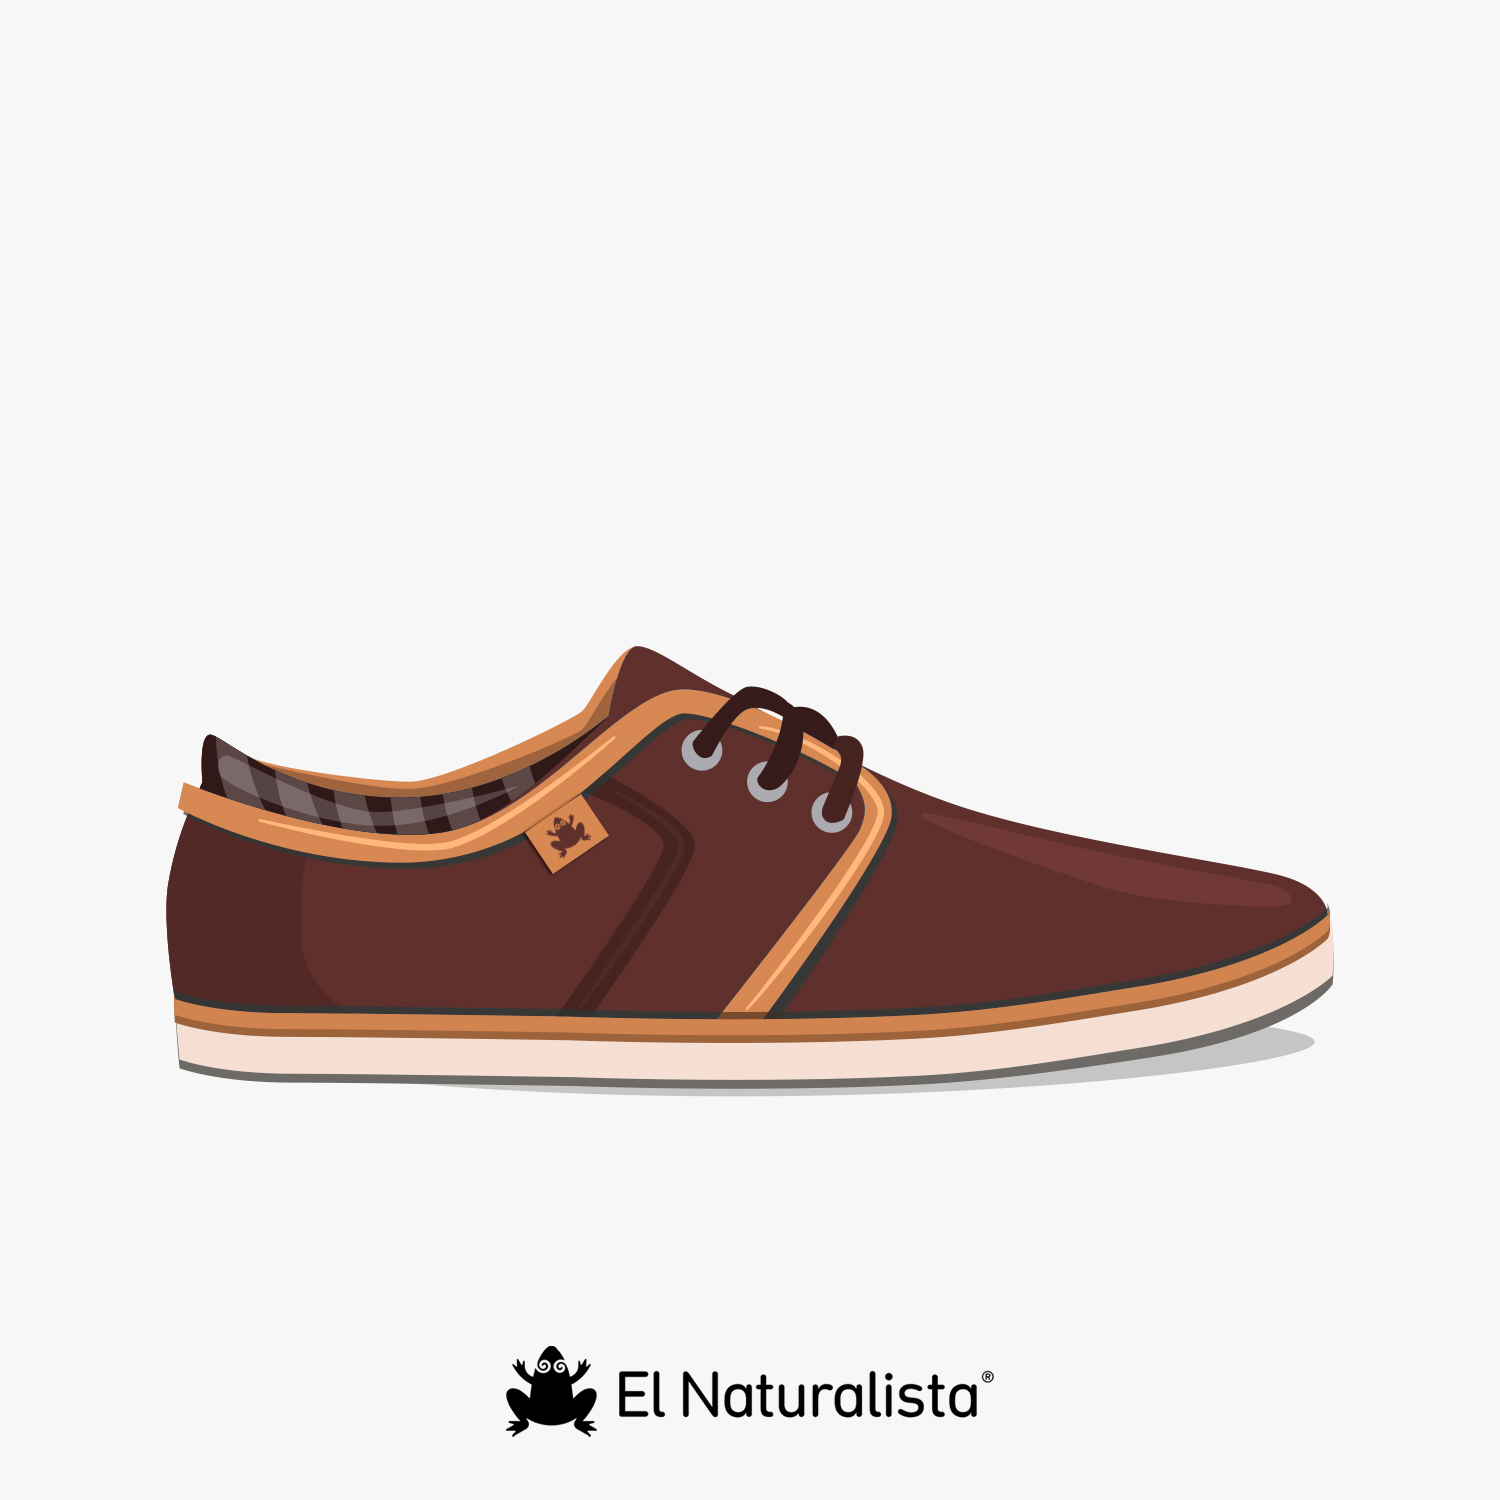 Schuhe el naturalista - Der TOP-Favorit unter allen Produkten